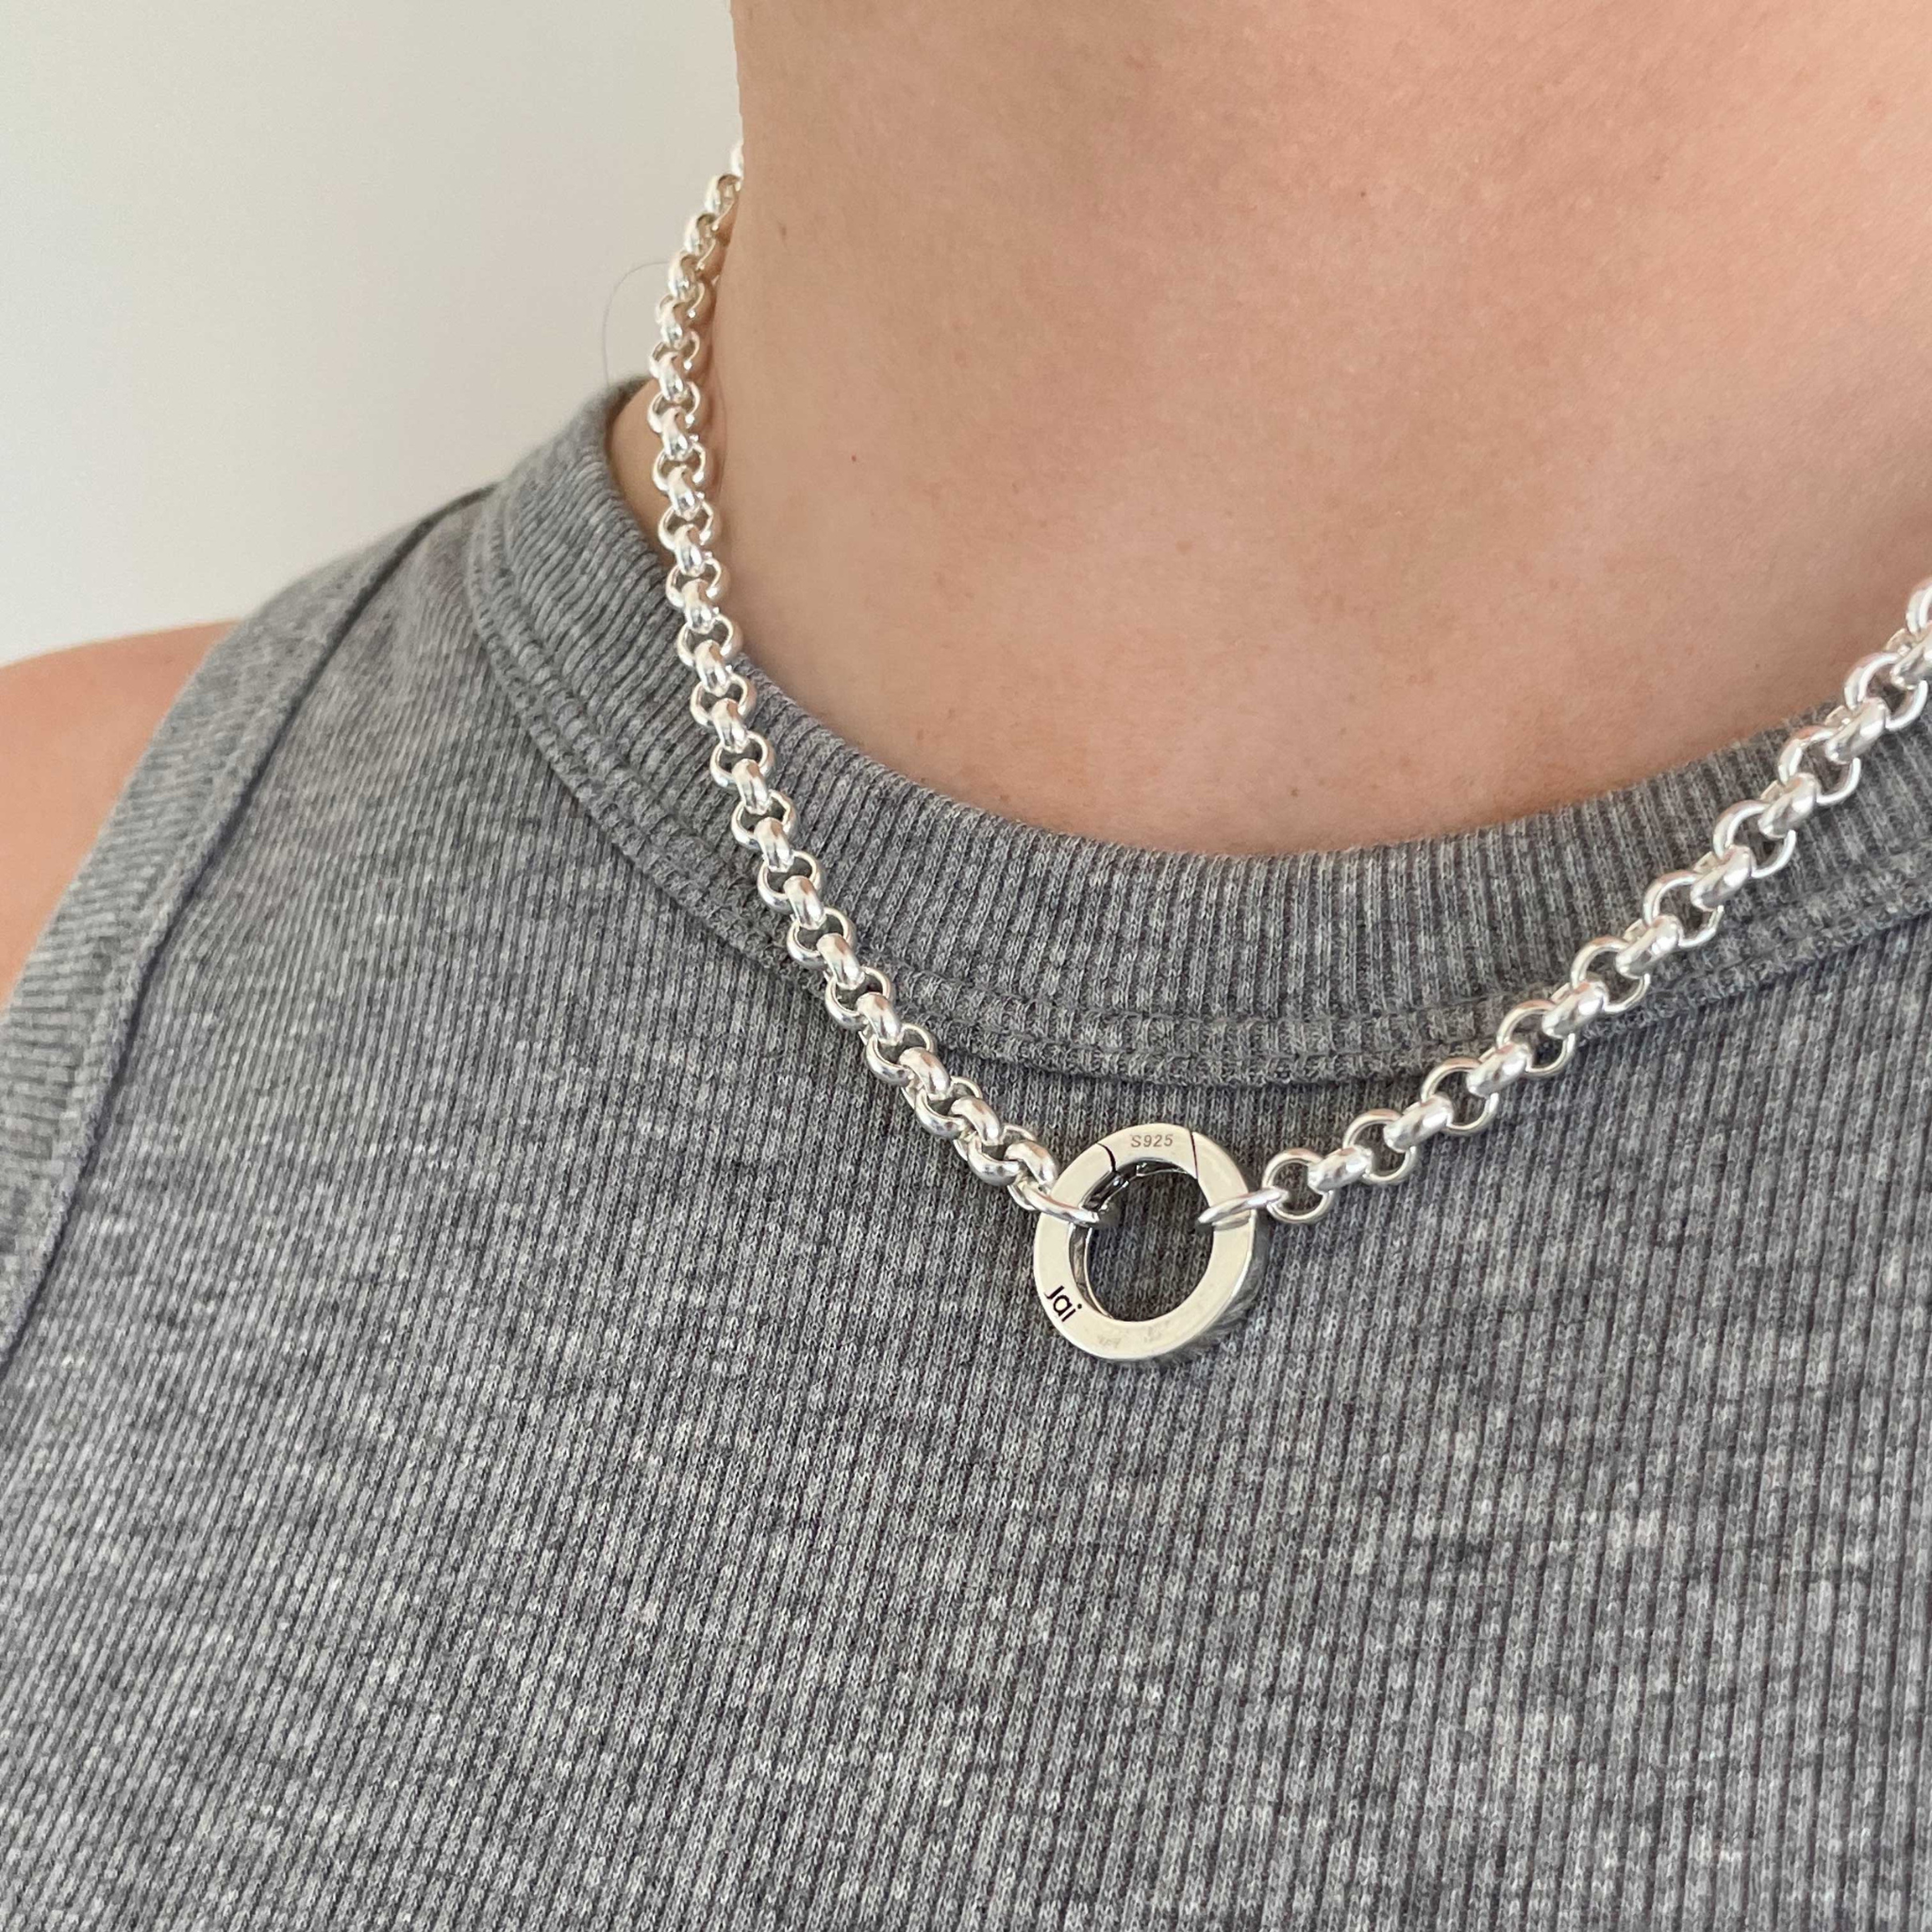 Men's Silver Mini Padlock Necklace| Mens Silver Stainless Steel Mini Padlock Pendant Necklace| Men's Stainless Steel Box Chain Necklace